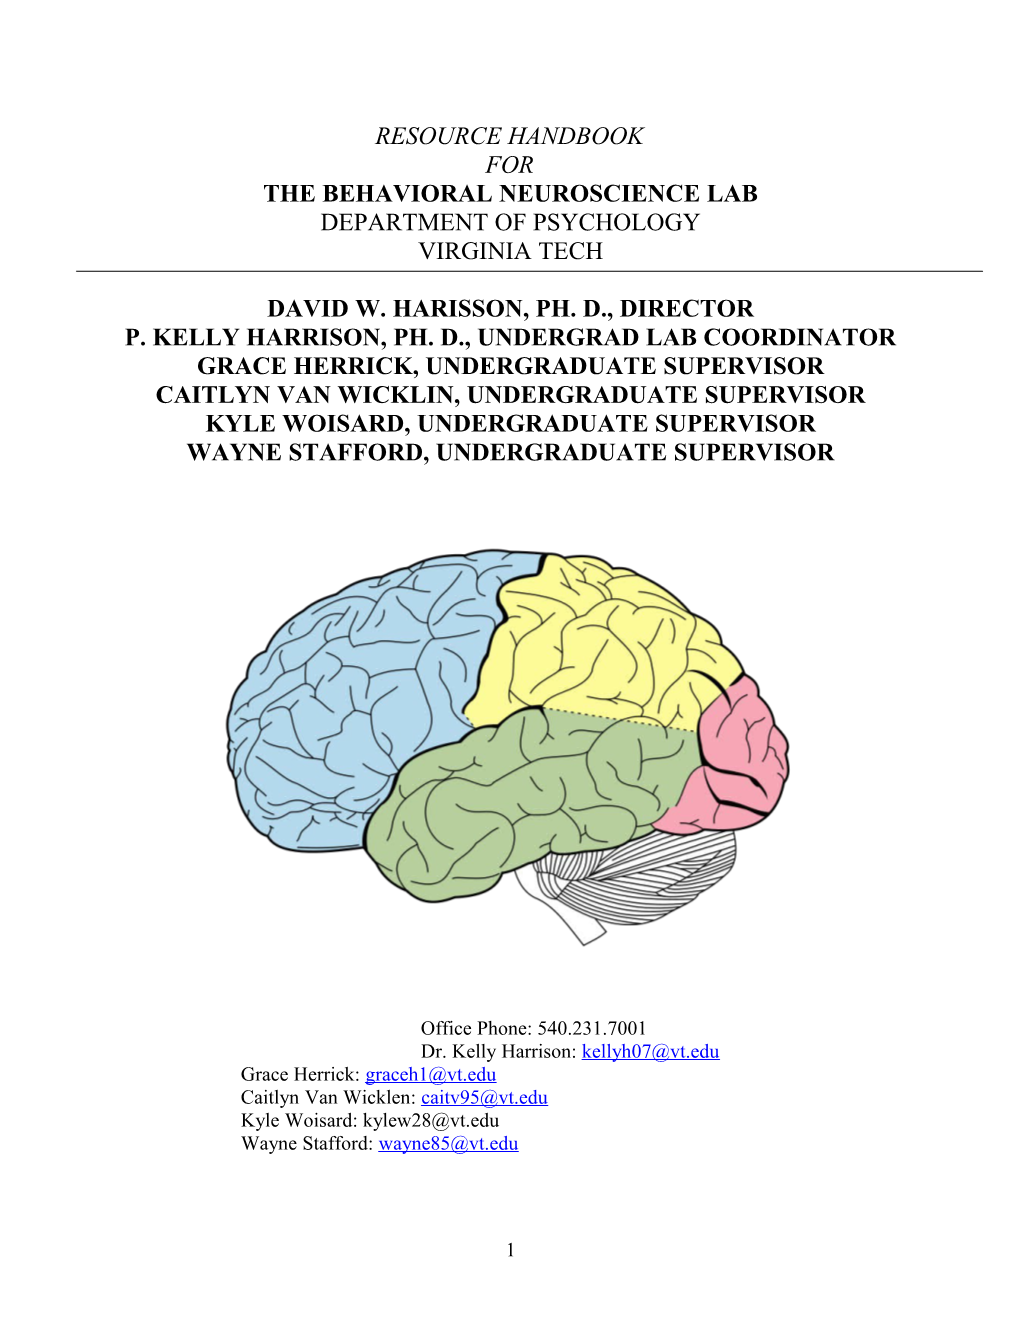 The Behavioral Neuroscience Lab